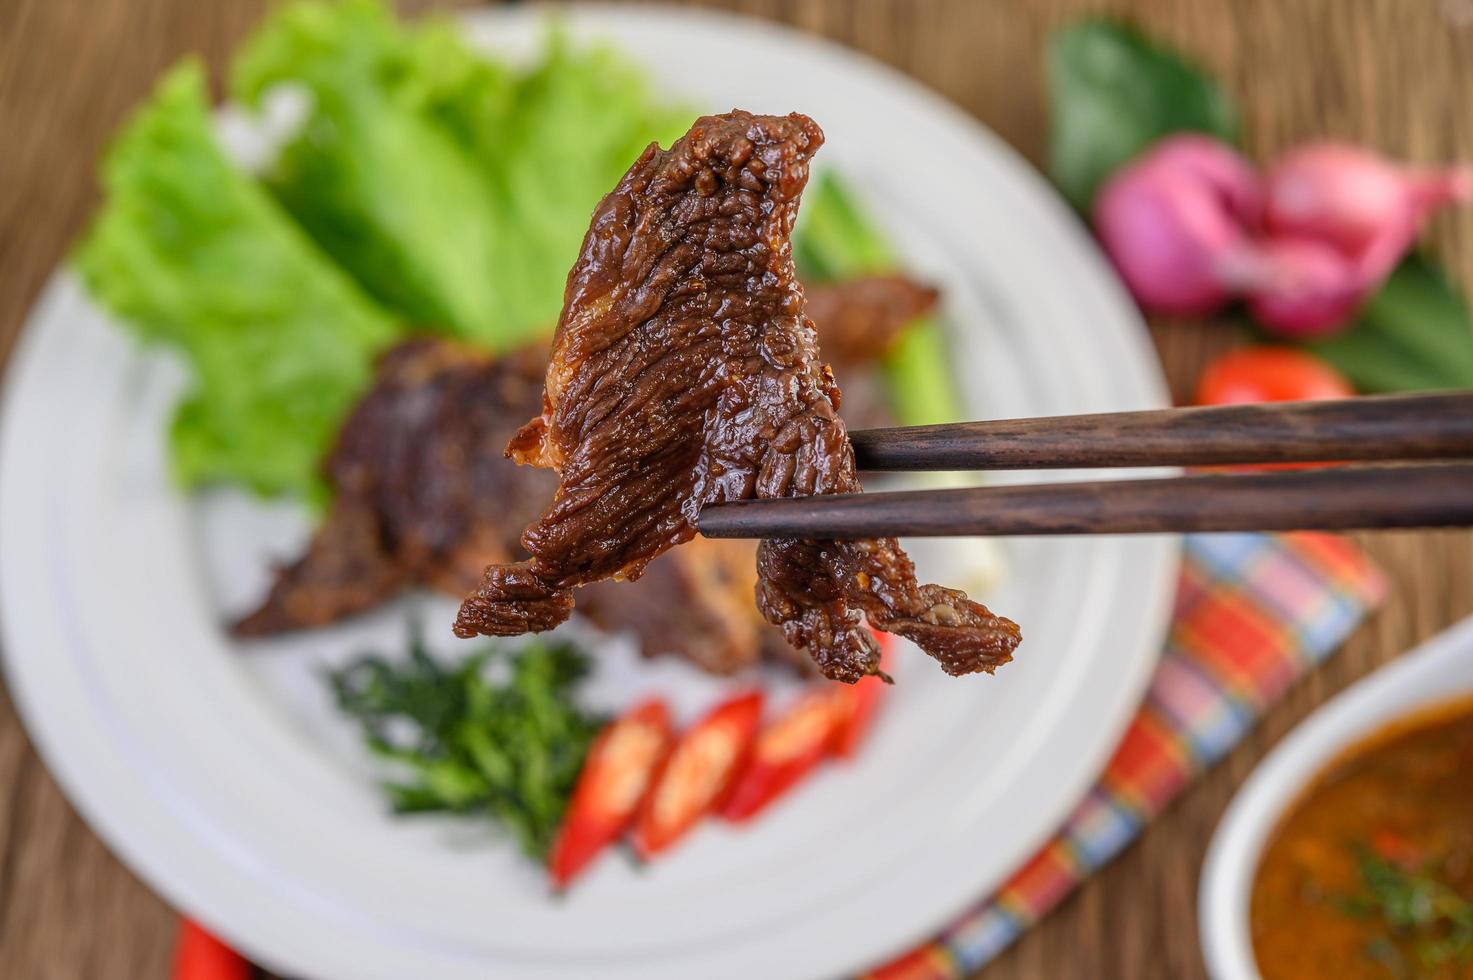 carne frita comida tailandesa na mesa de madeira foto